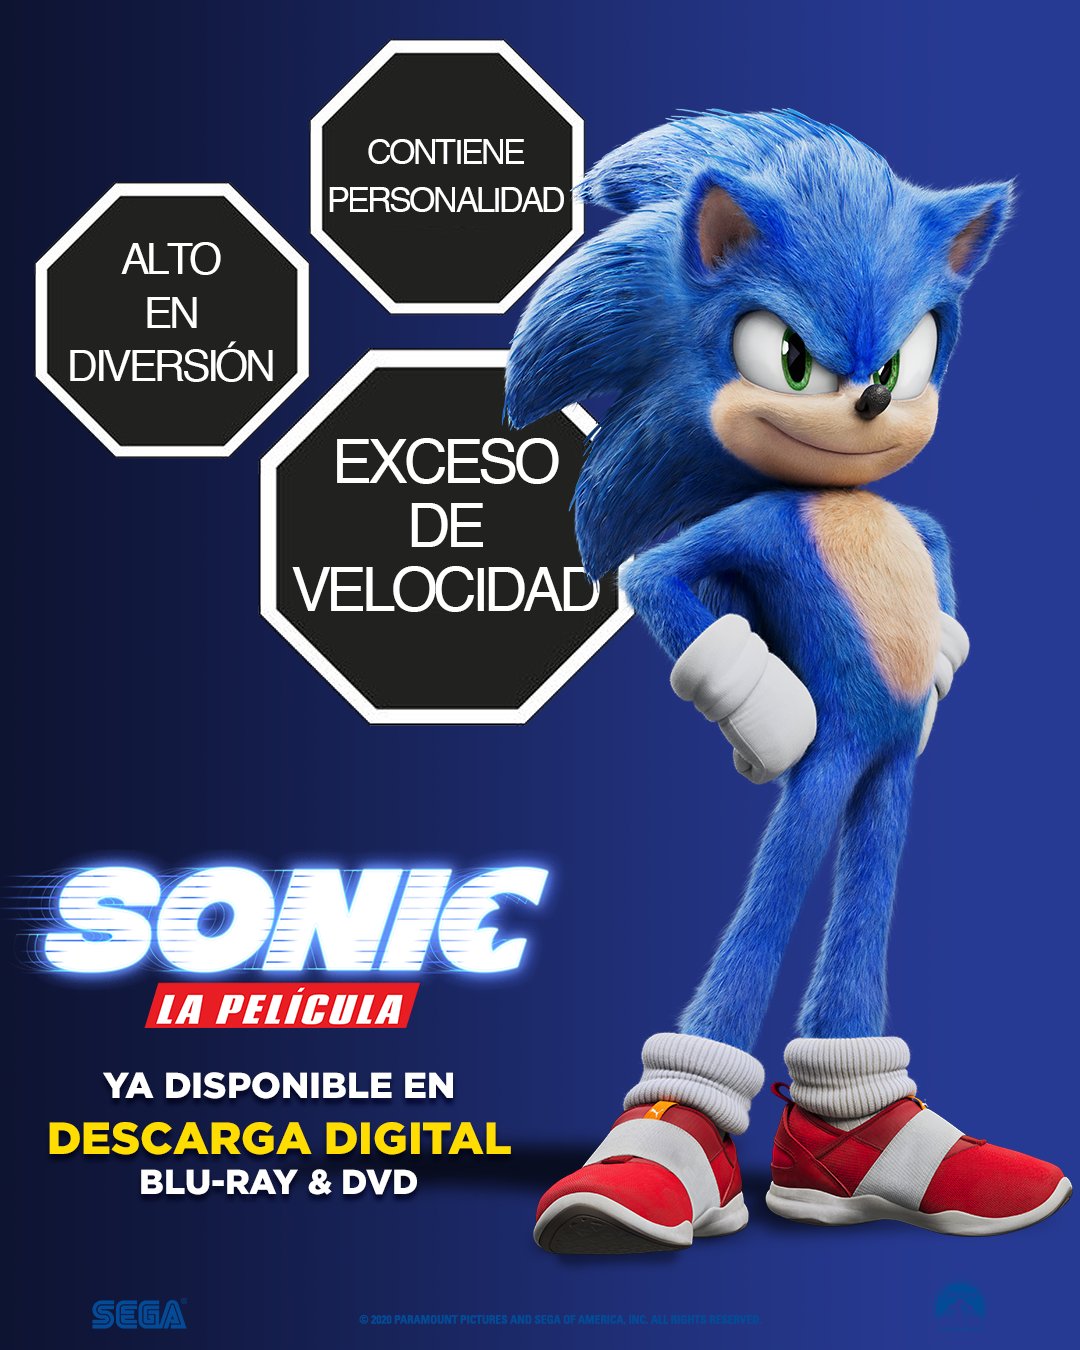 Sonic (@SonicEIErizo) / Twitter